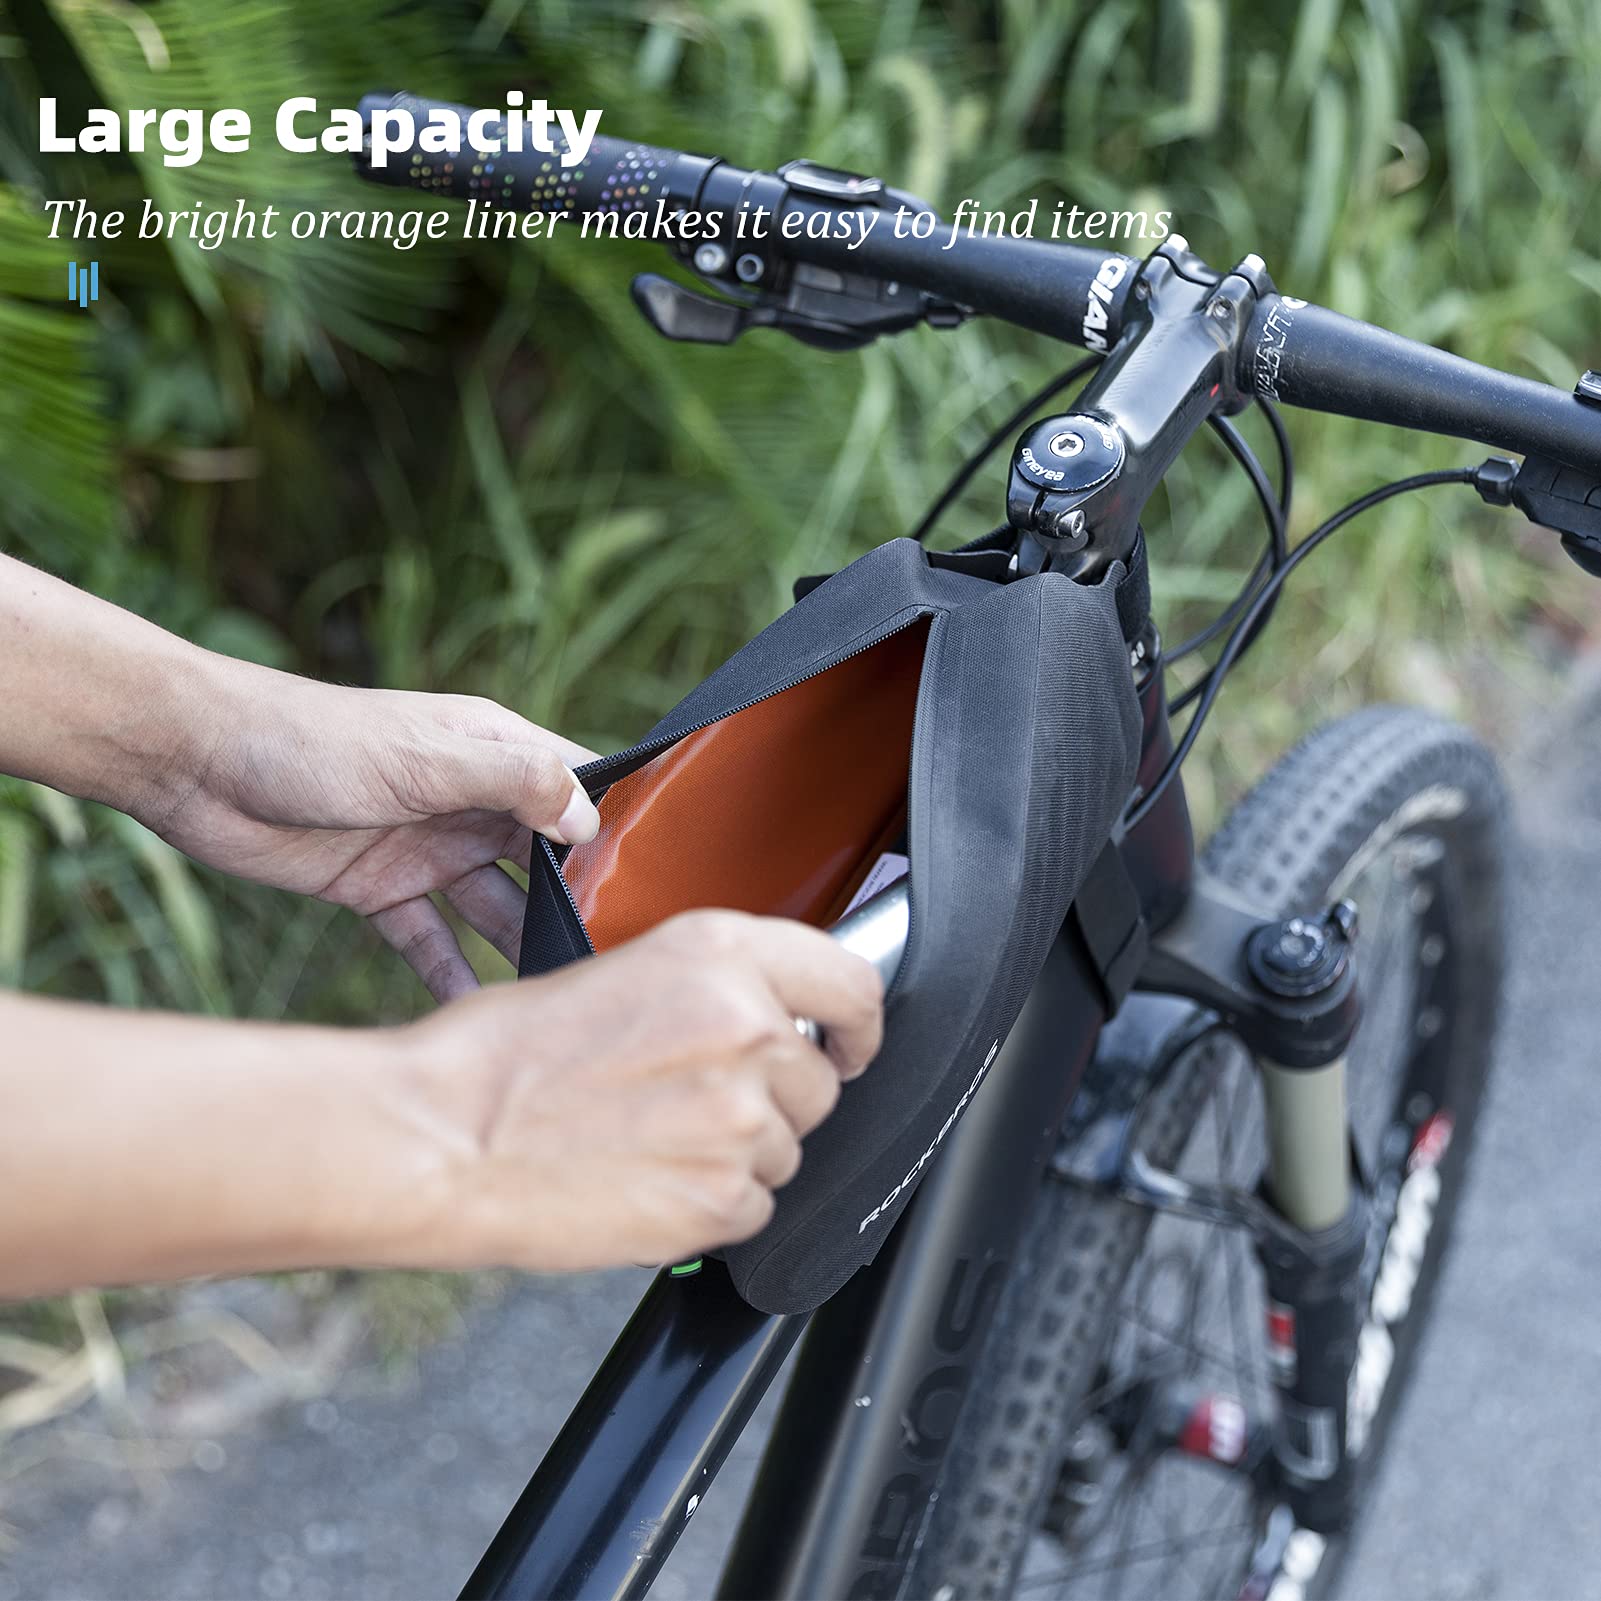 ROCKBROS 100% Waterproof Bike Frame Bag With Upgraded Seamless Zipper